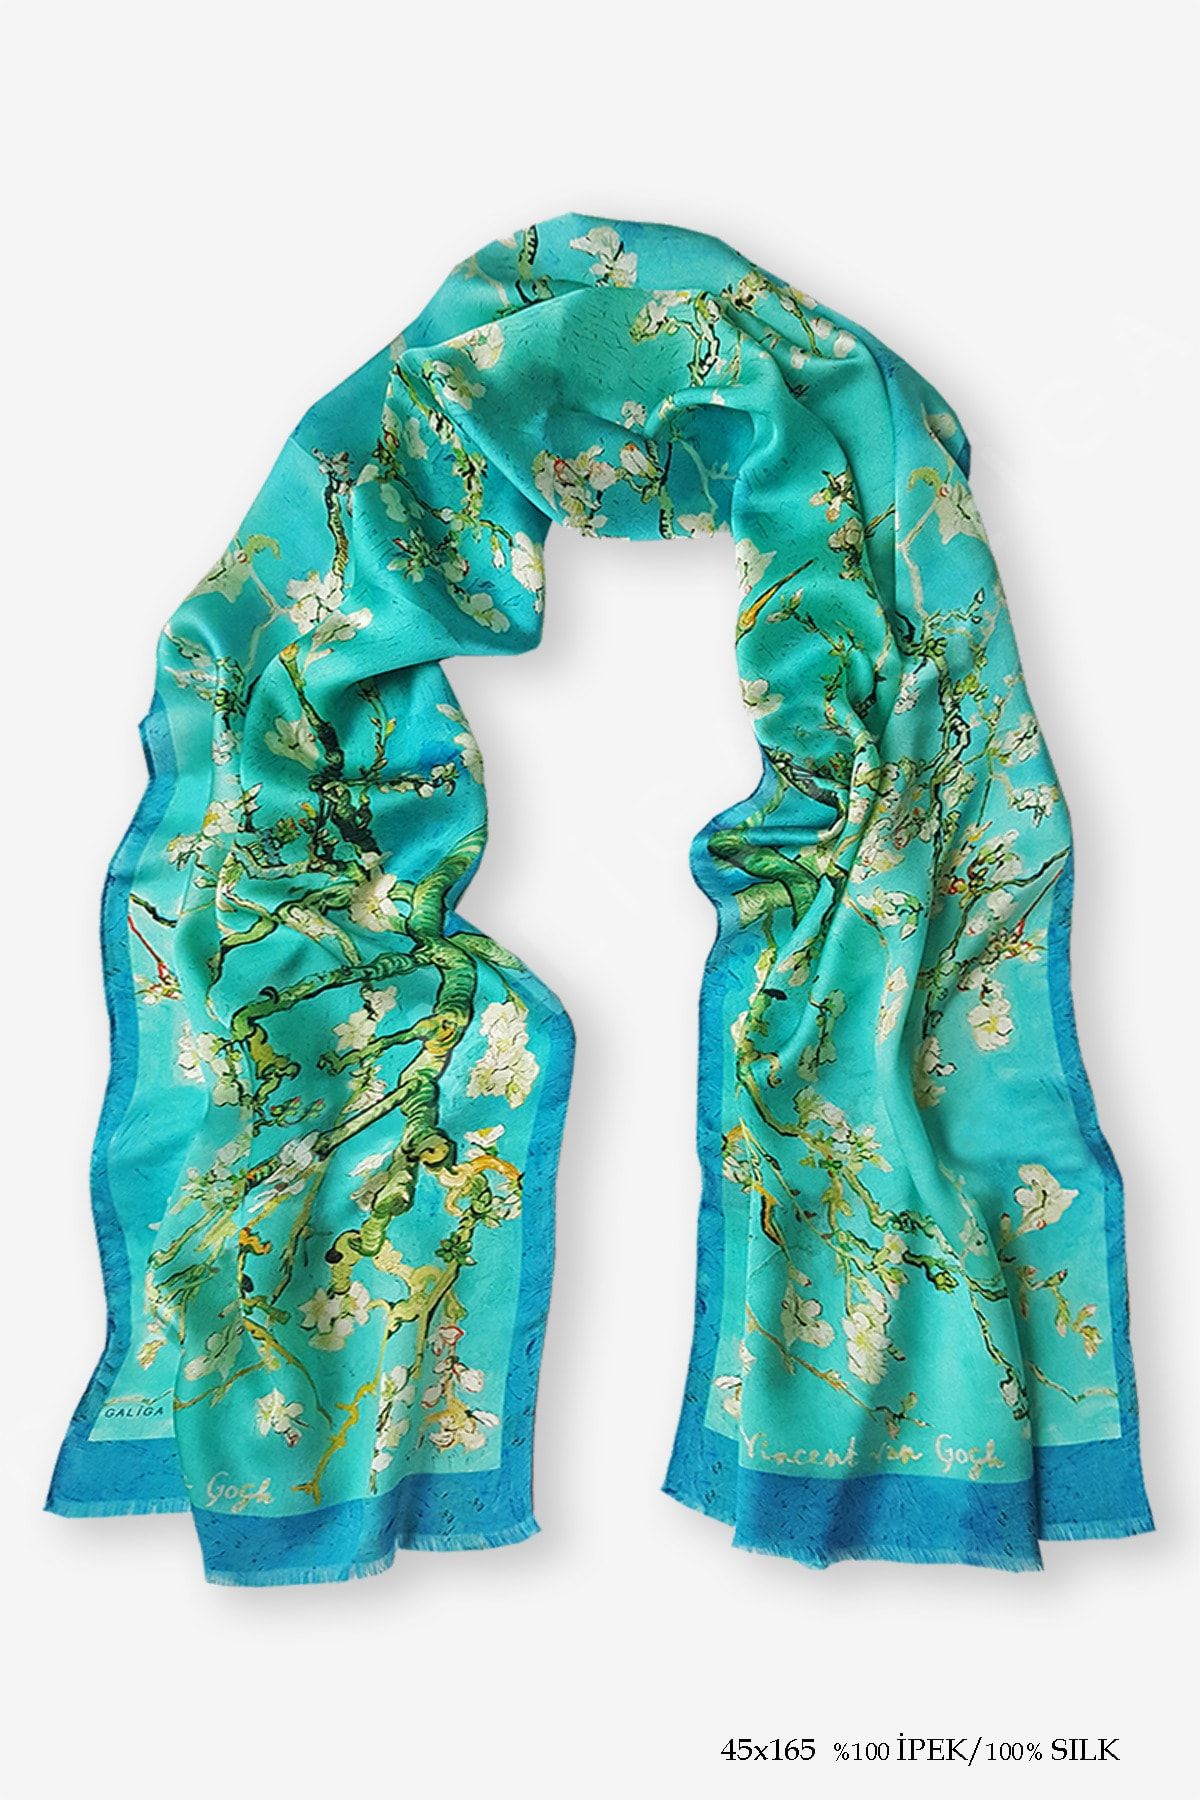 Galiga Van Gogh-almond Blossom %100 Ipek Fular 45*165cm 'art On Silk'